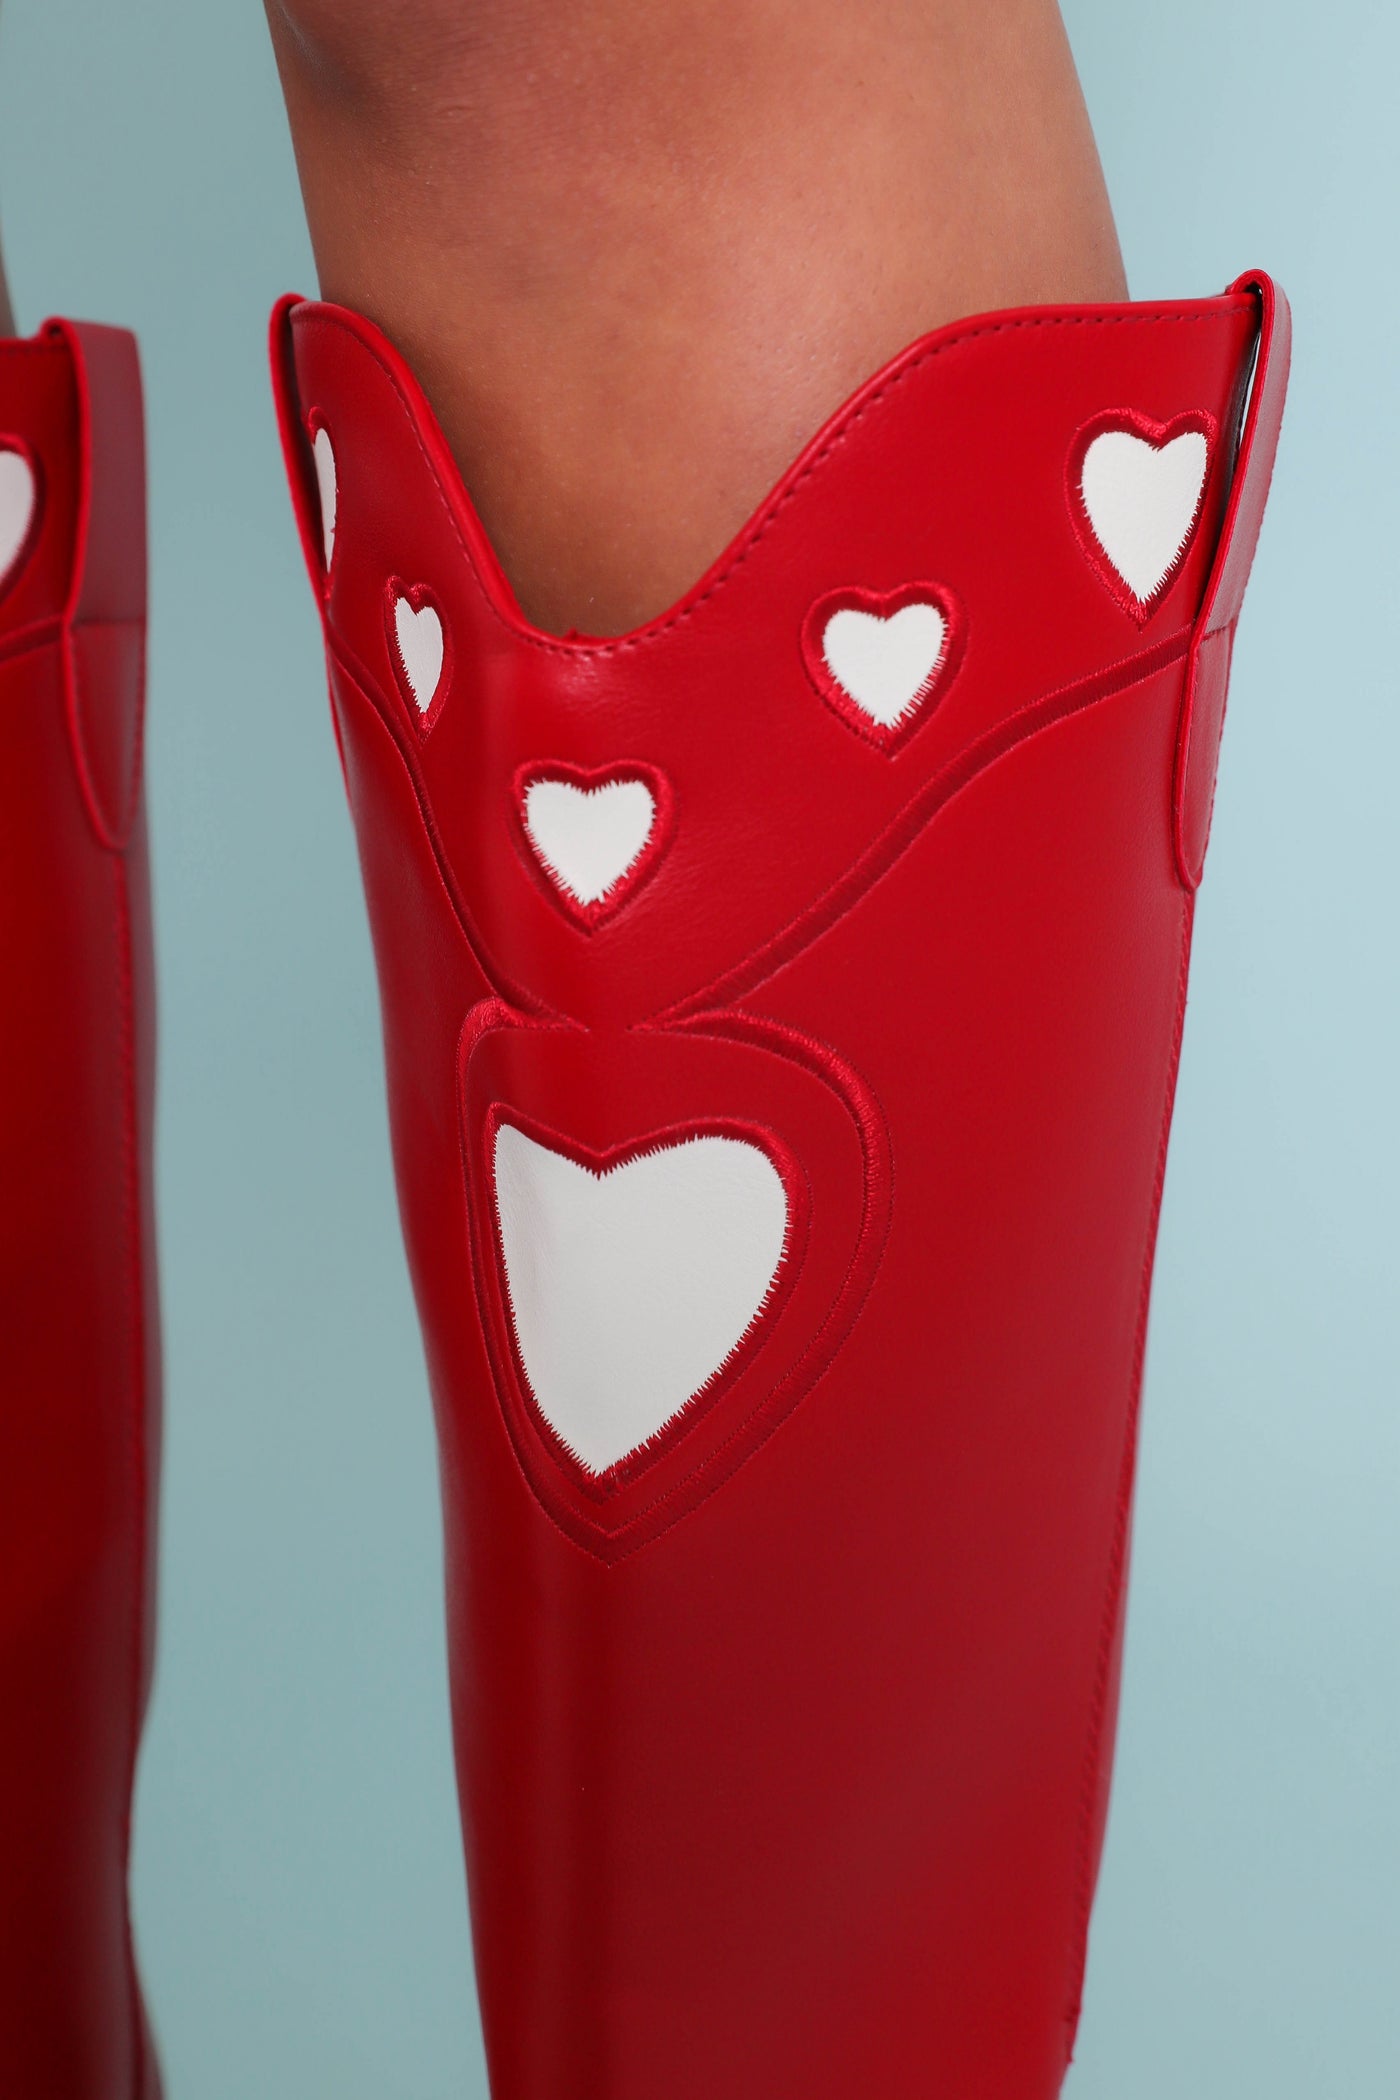 Women's Heart Western Boots- Women's Red Cowboy Boots- Billini Heart Boots